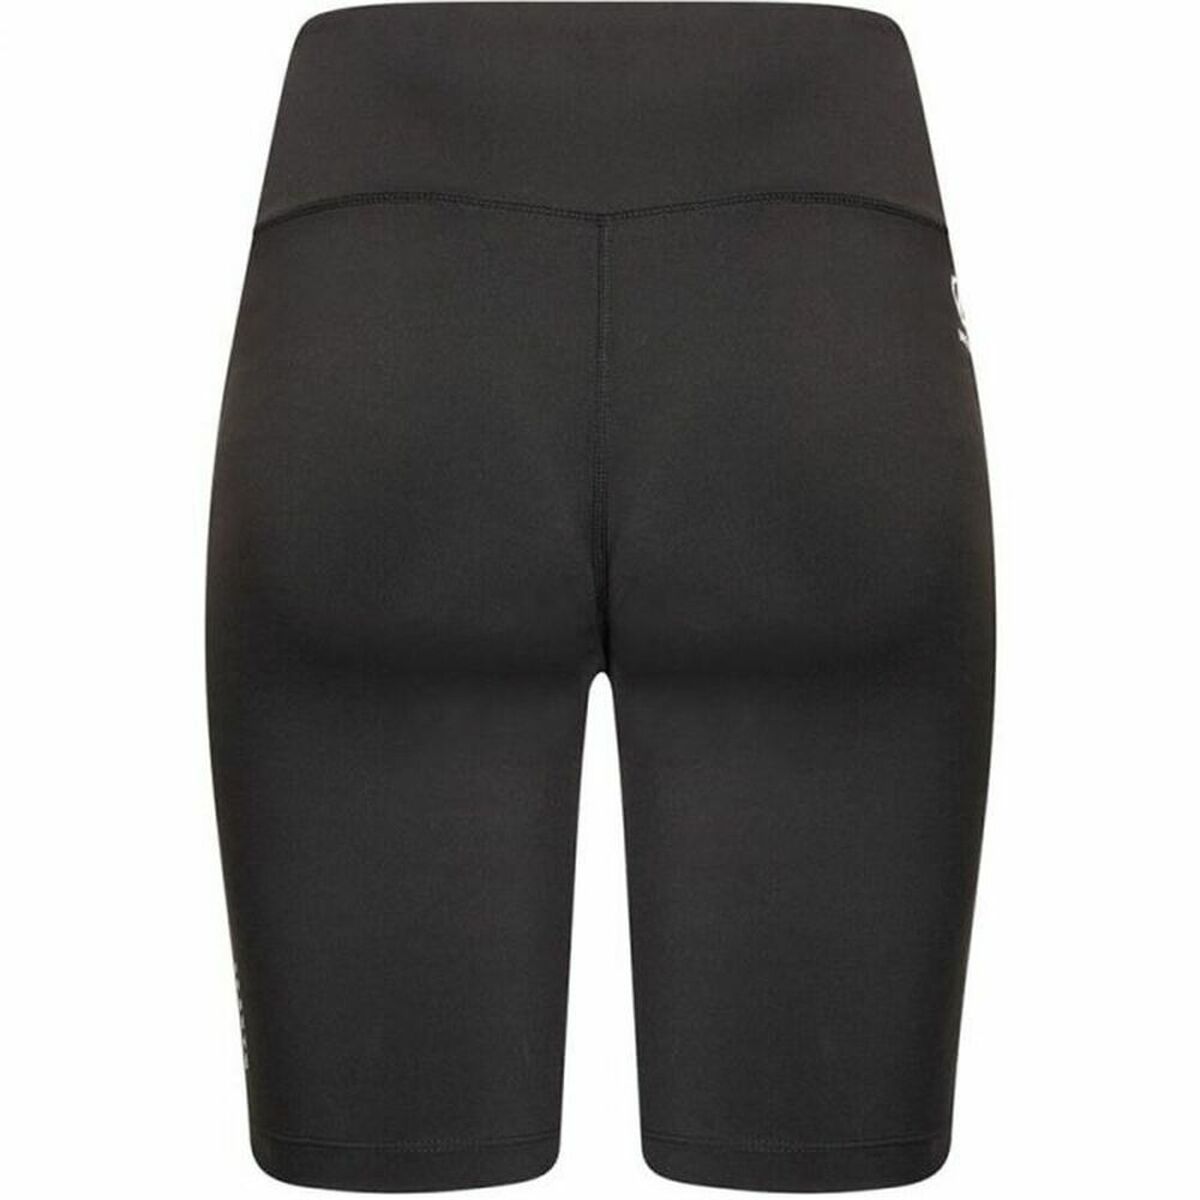 Sport leggings for Women Dare 2b Lounge About Black